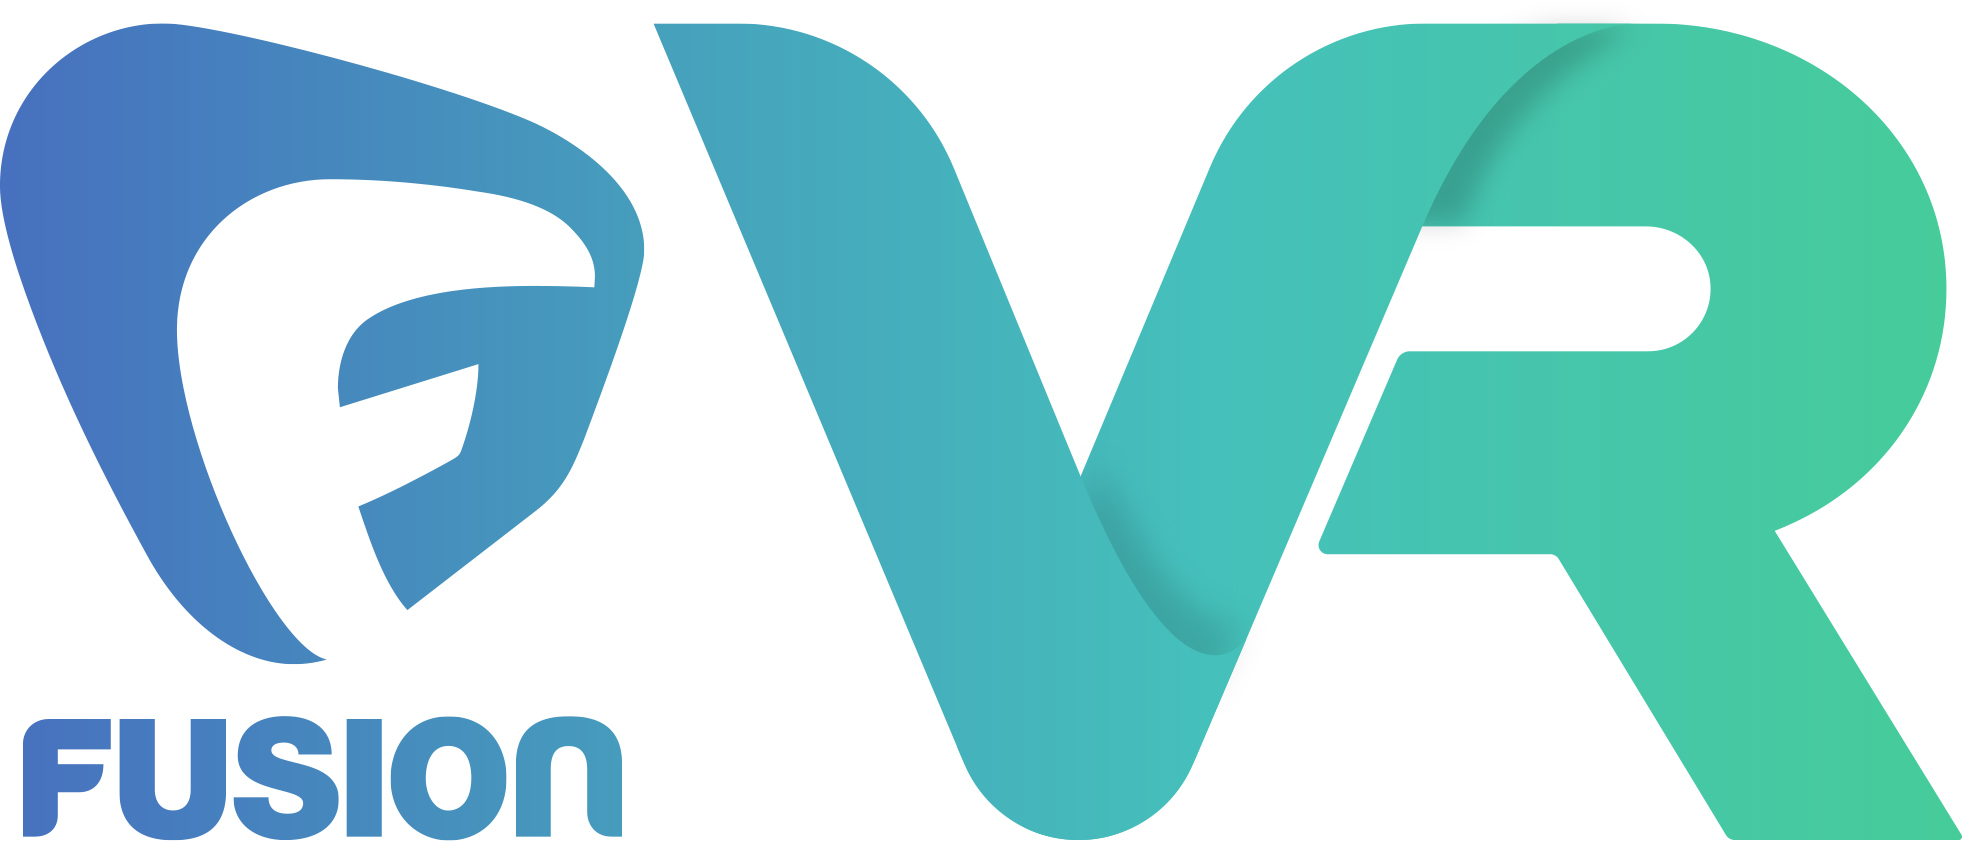 Vr net. VR эмблема. Логотип VR компании. Виртуальная реальность логотип. VR логотип букв.